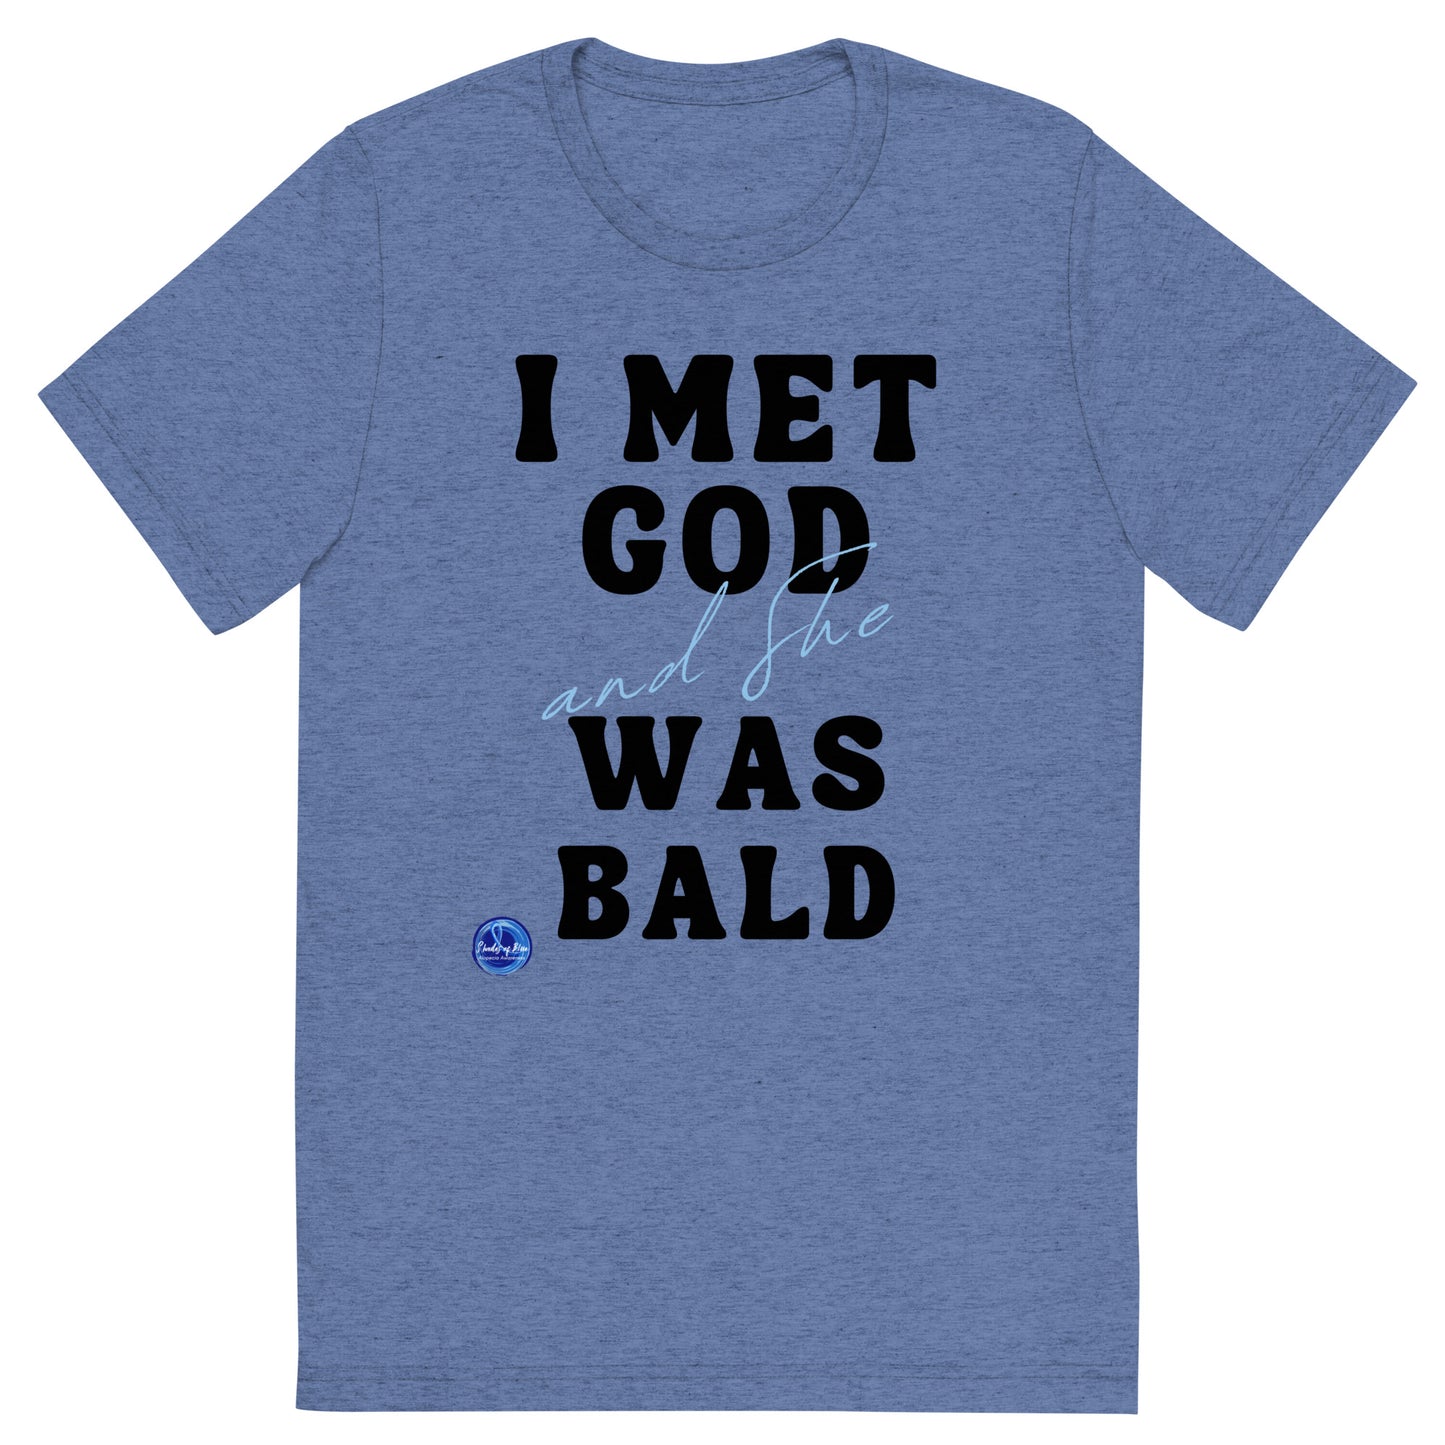 I MET GOD...Short sleeve t-shirt